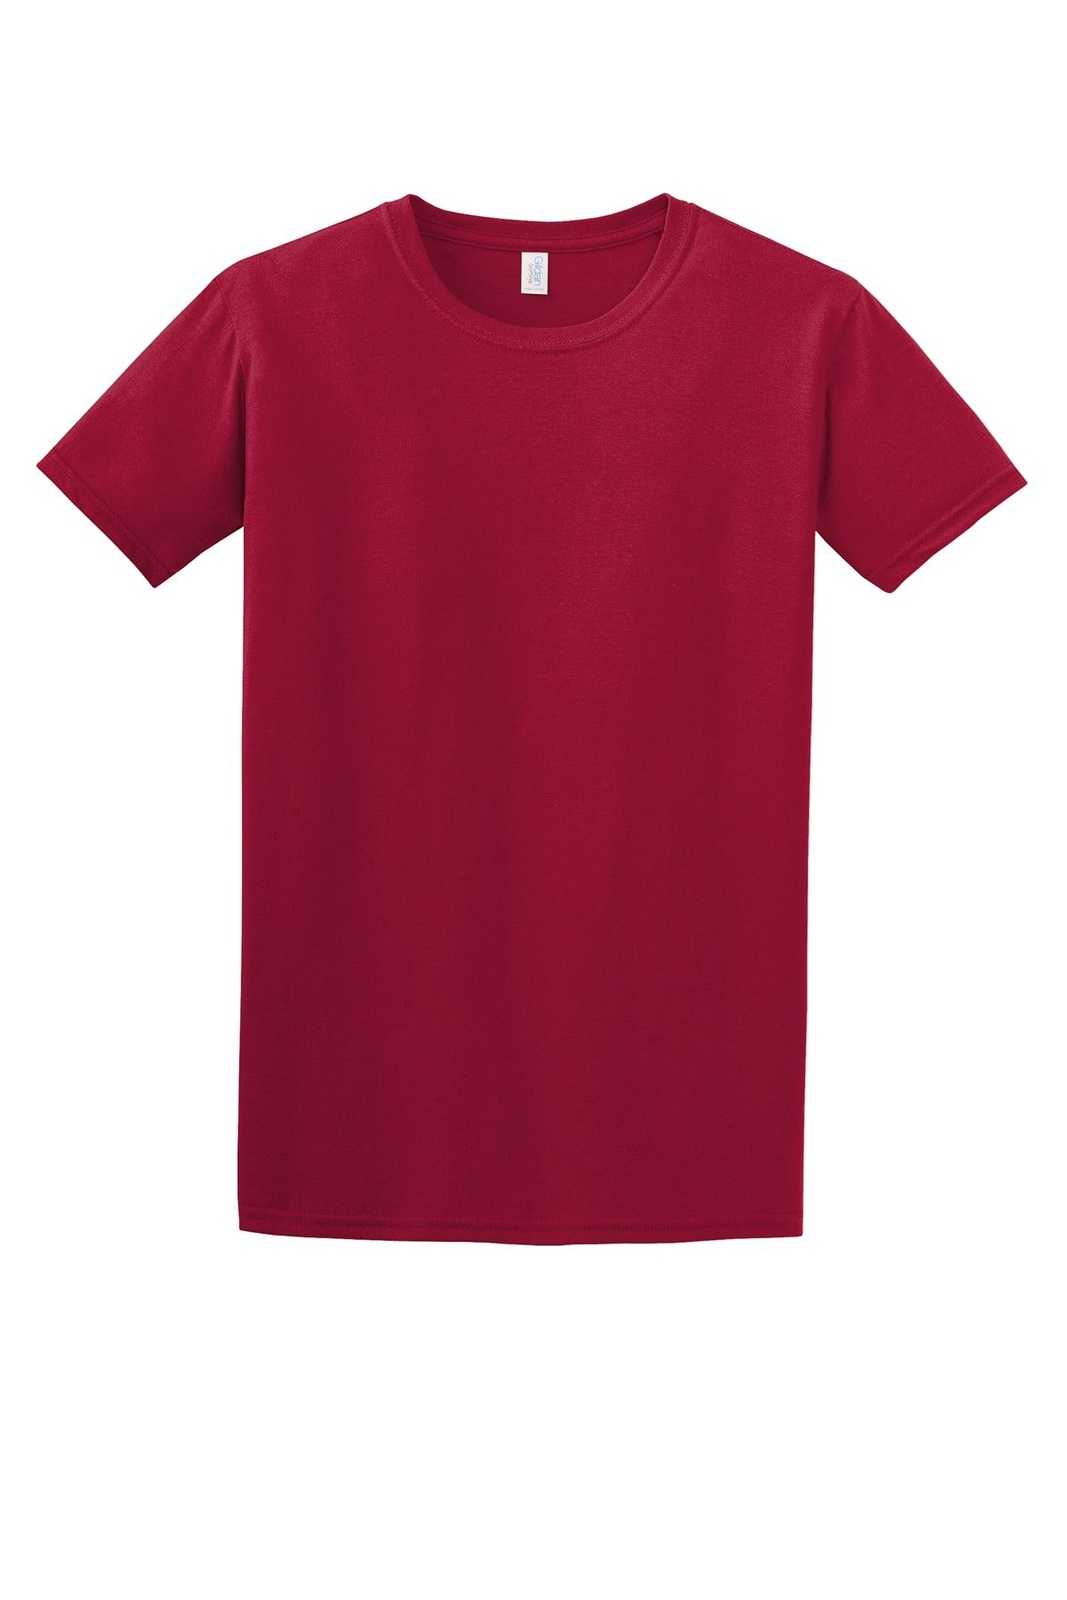 Louisville Cardinals Shirt Mens Large Black Tie Dye Rugby Gildan Cotton